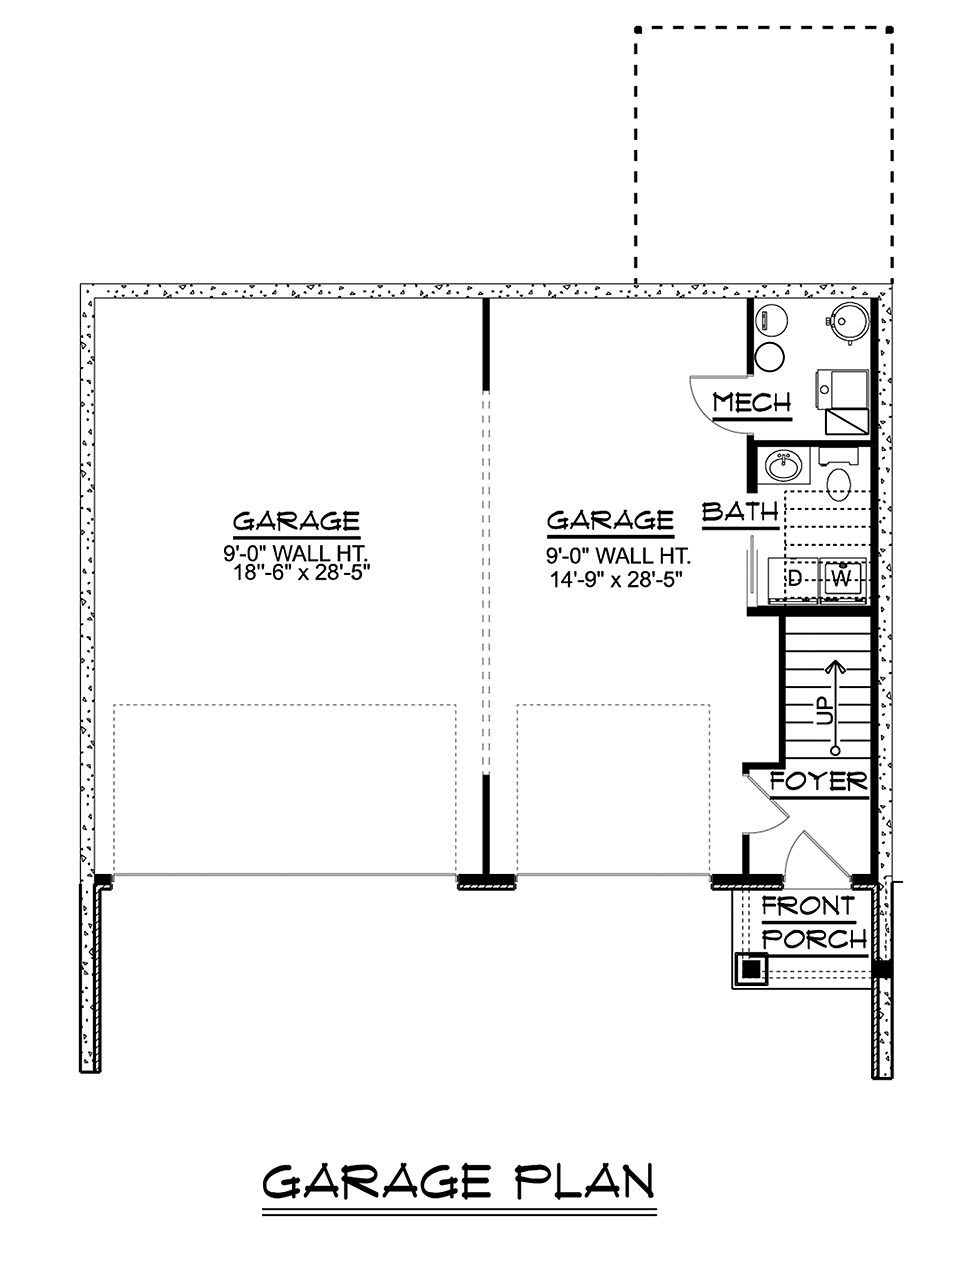 Garage Plan 51820 - 2 Car Garage Apartment Level One